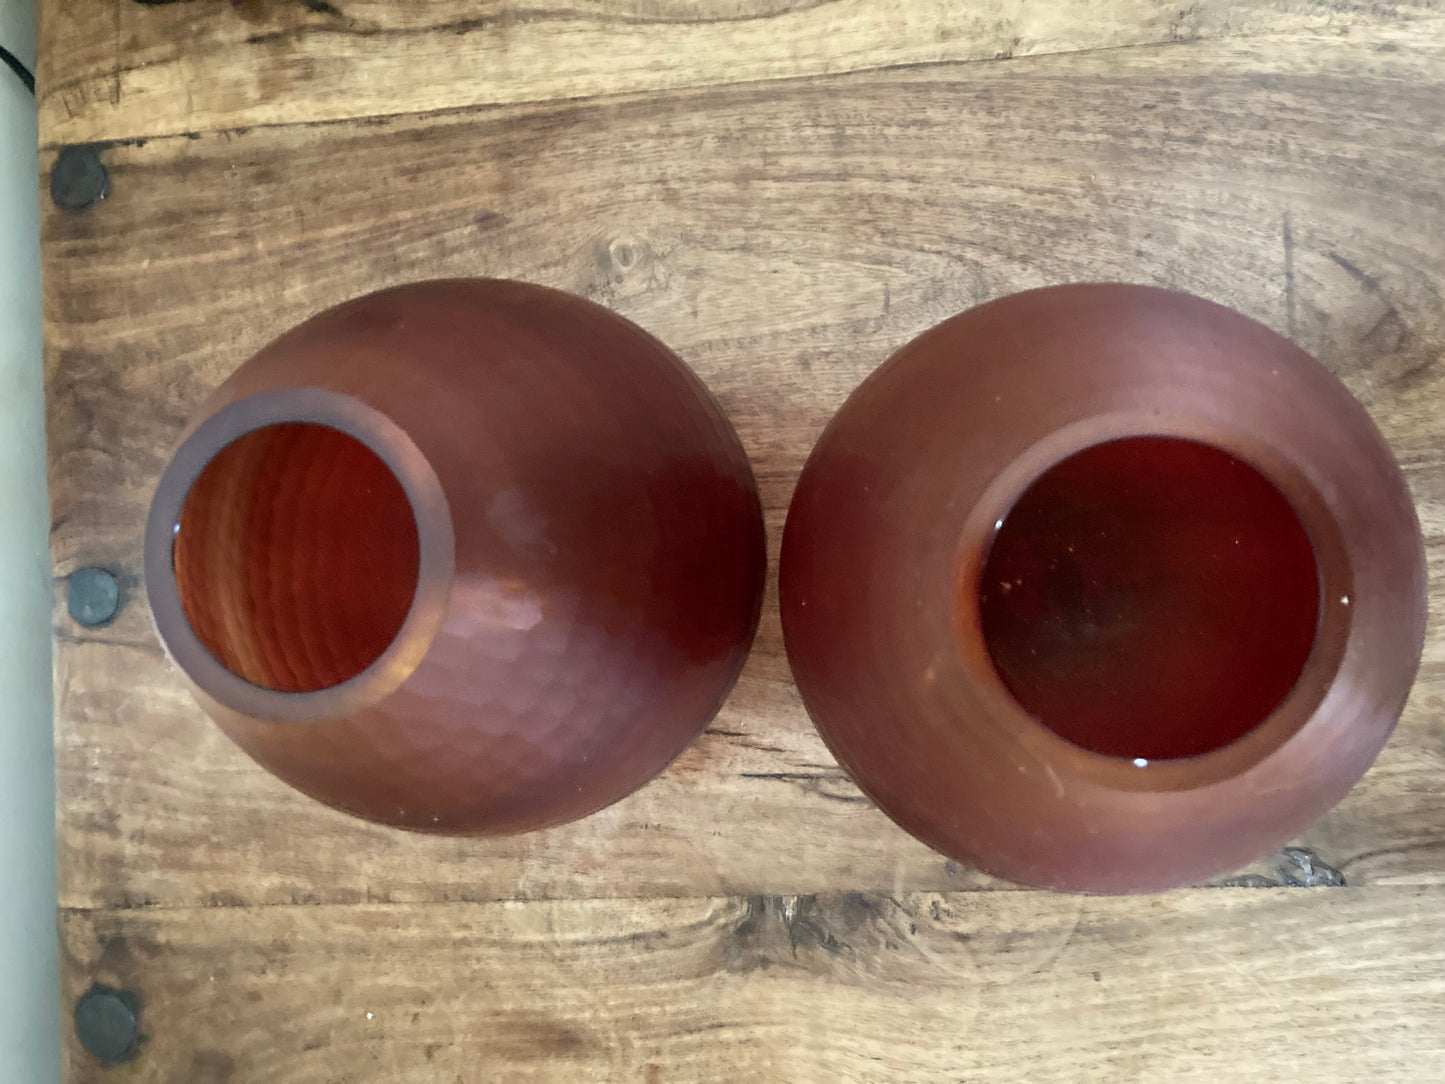 Amber Textured Glass Teardrop Vase Pair